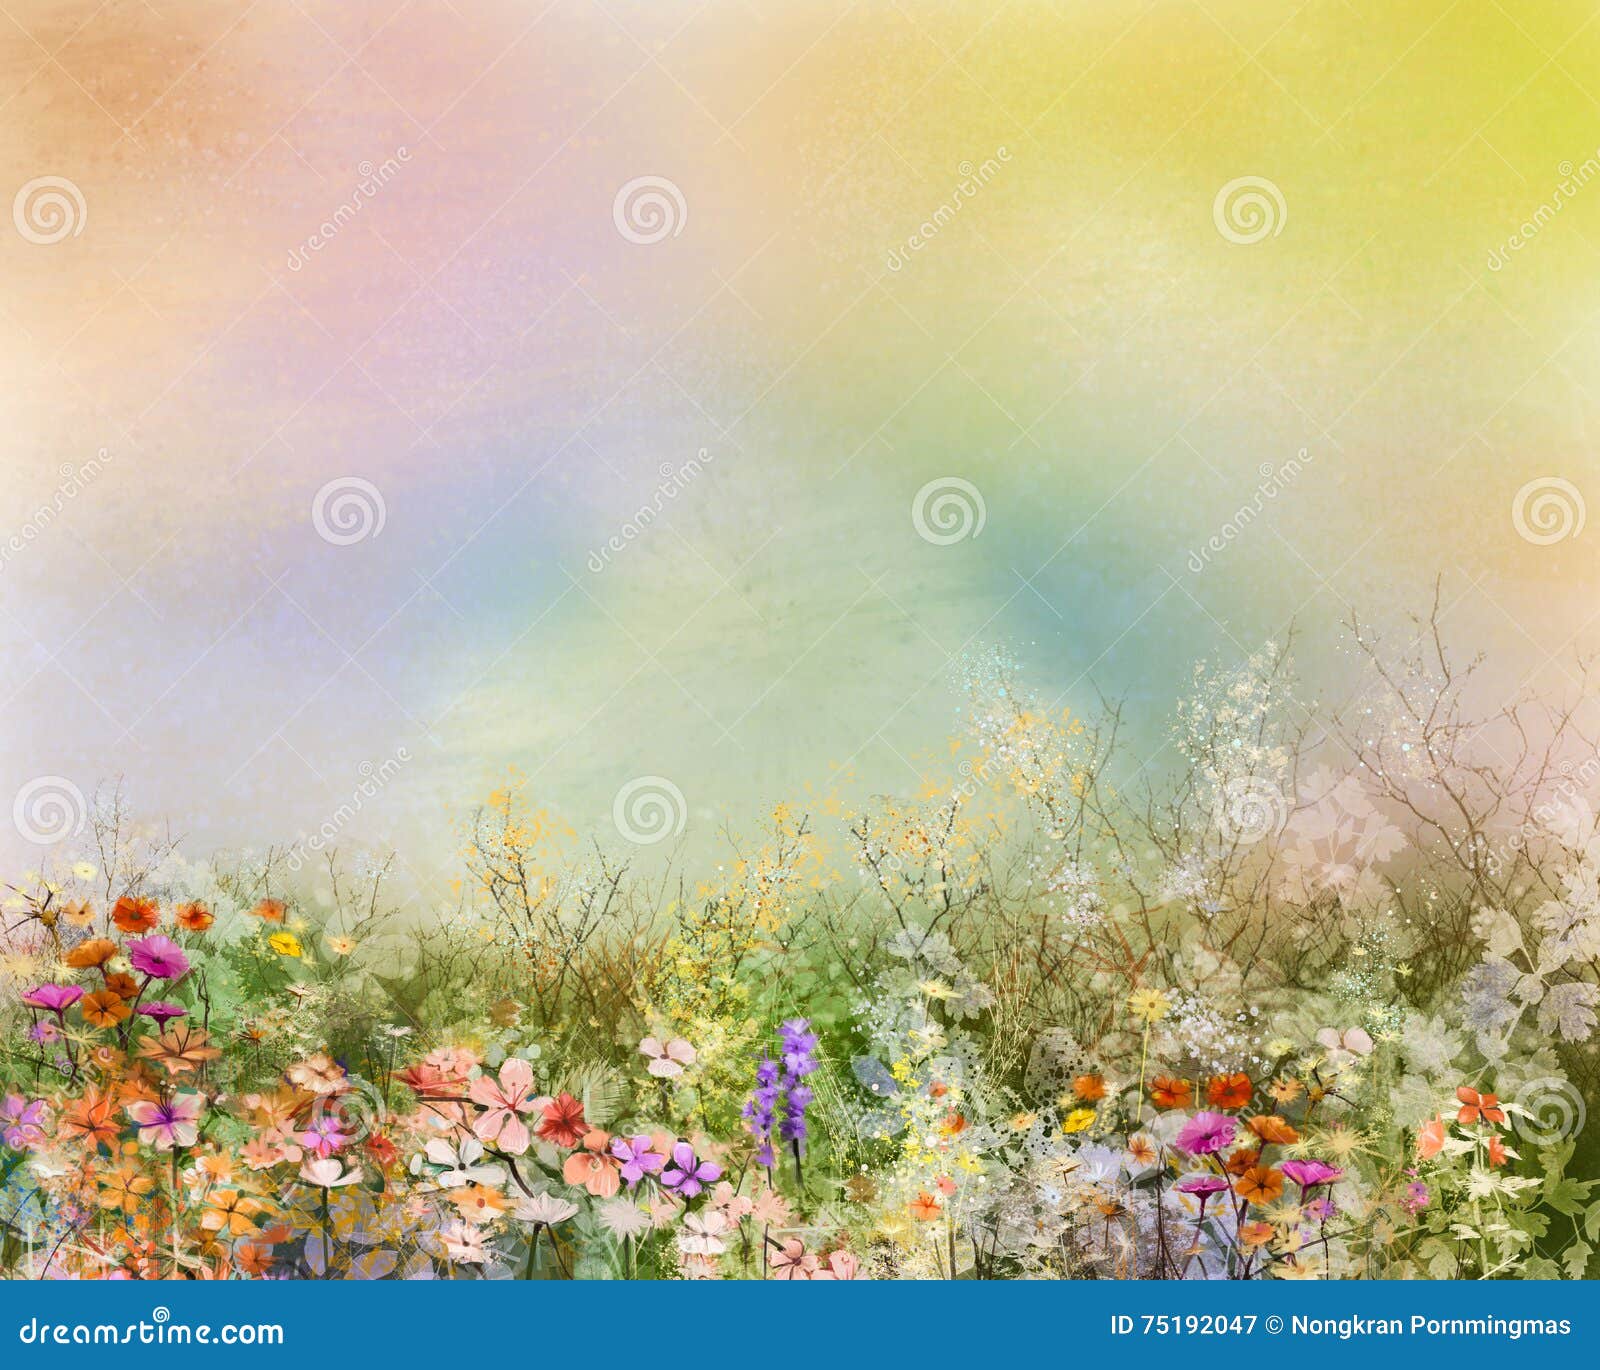 oil painting flowers plant. purple cosmos, white daisy, cornflower, wildflower, dandelion flower in fields.